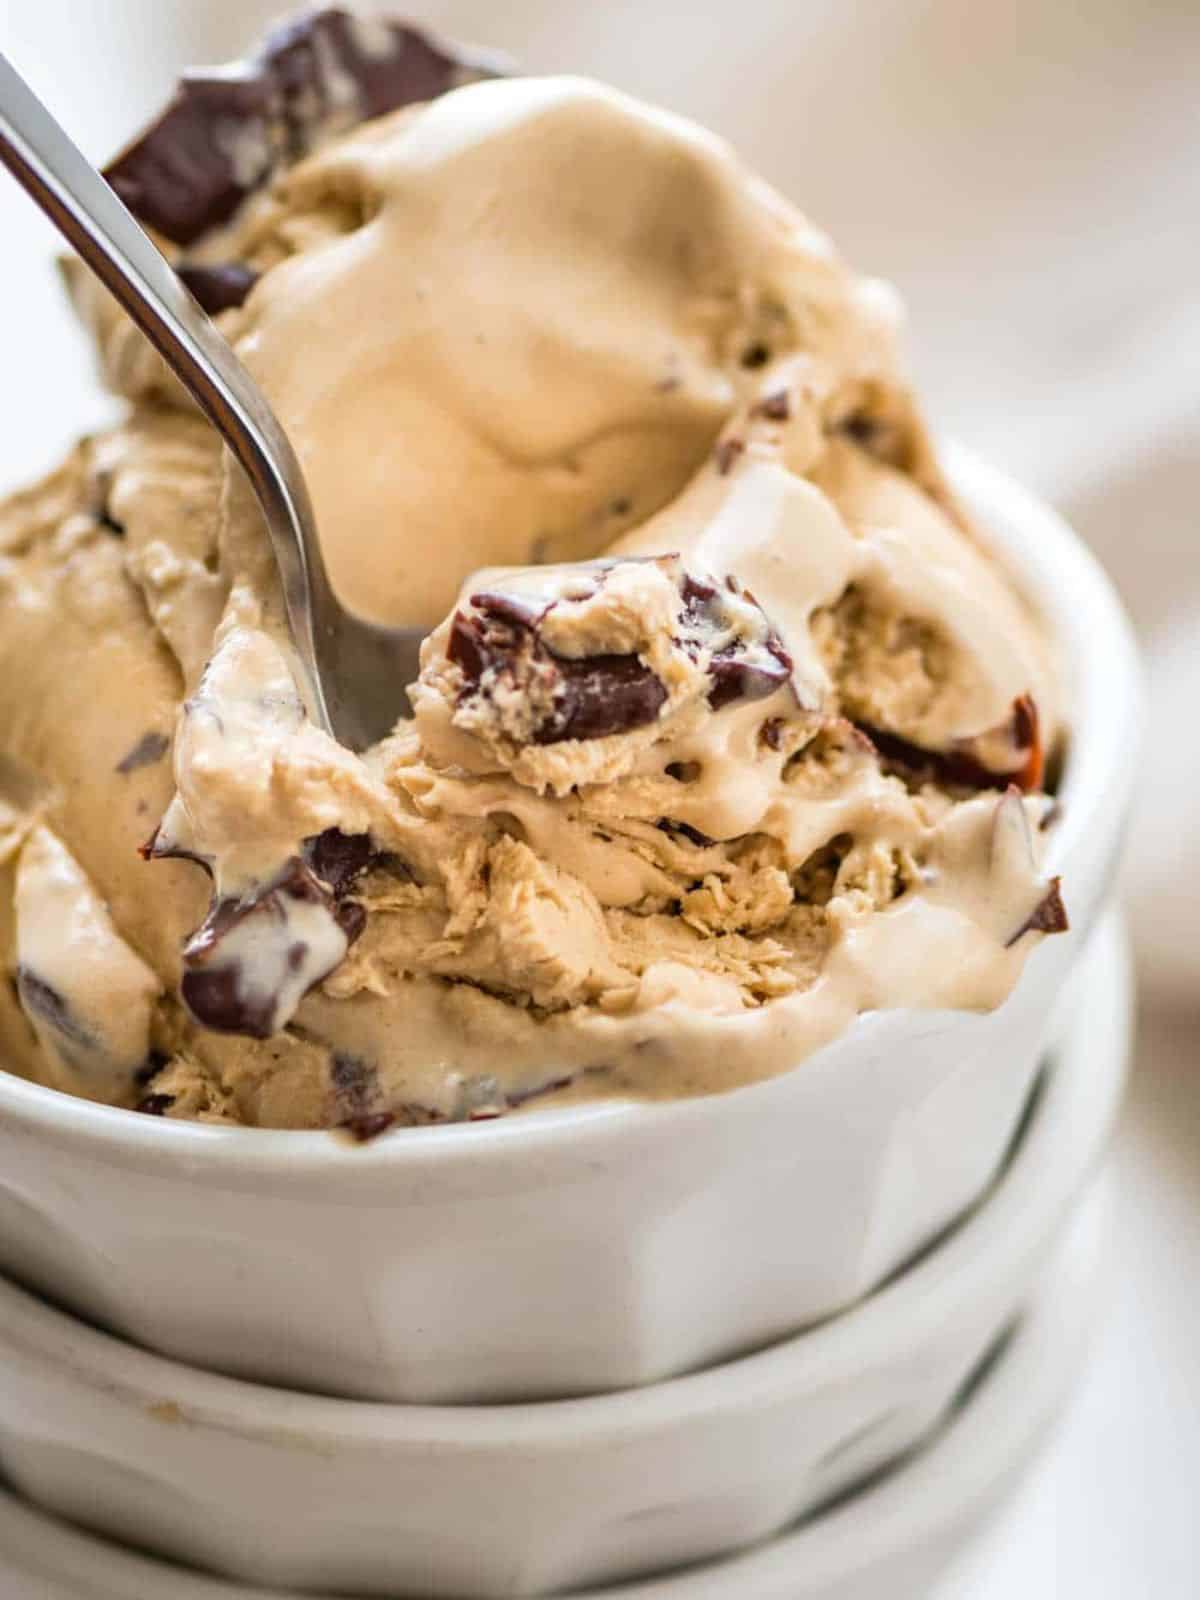 creamy espresso kahlua ice cream with dark chocolate swirl for some cacao flavor.